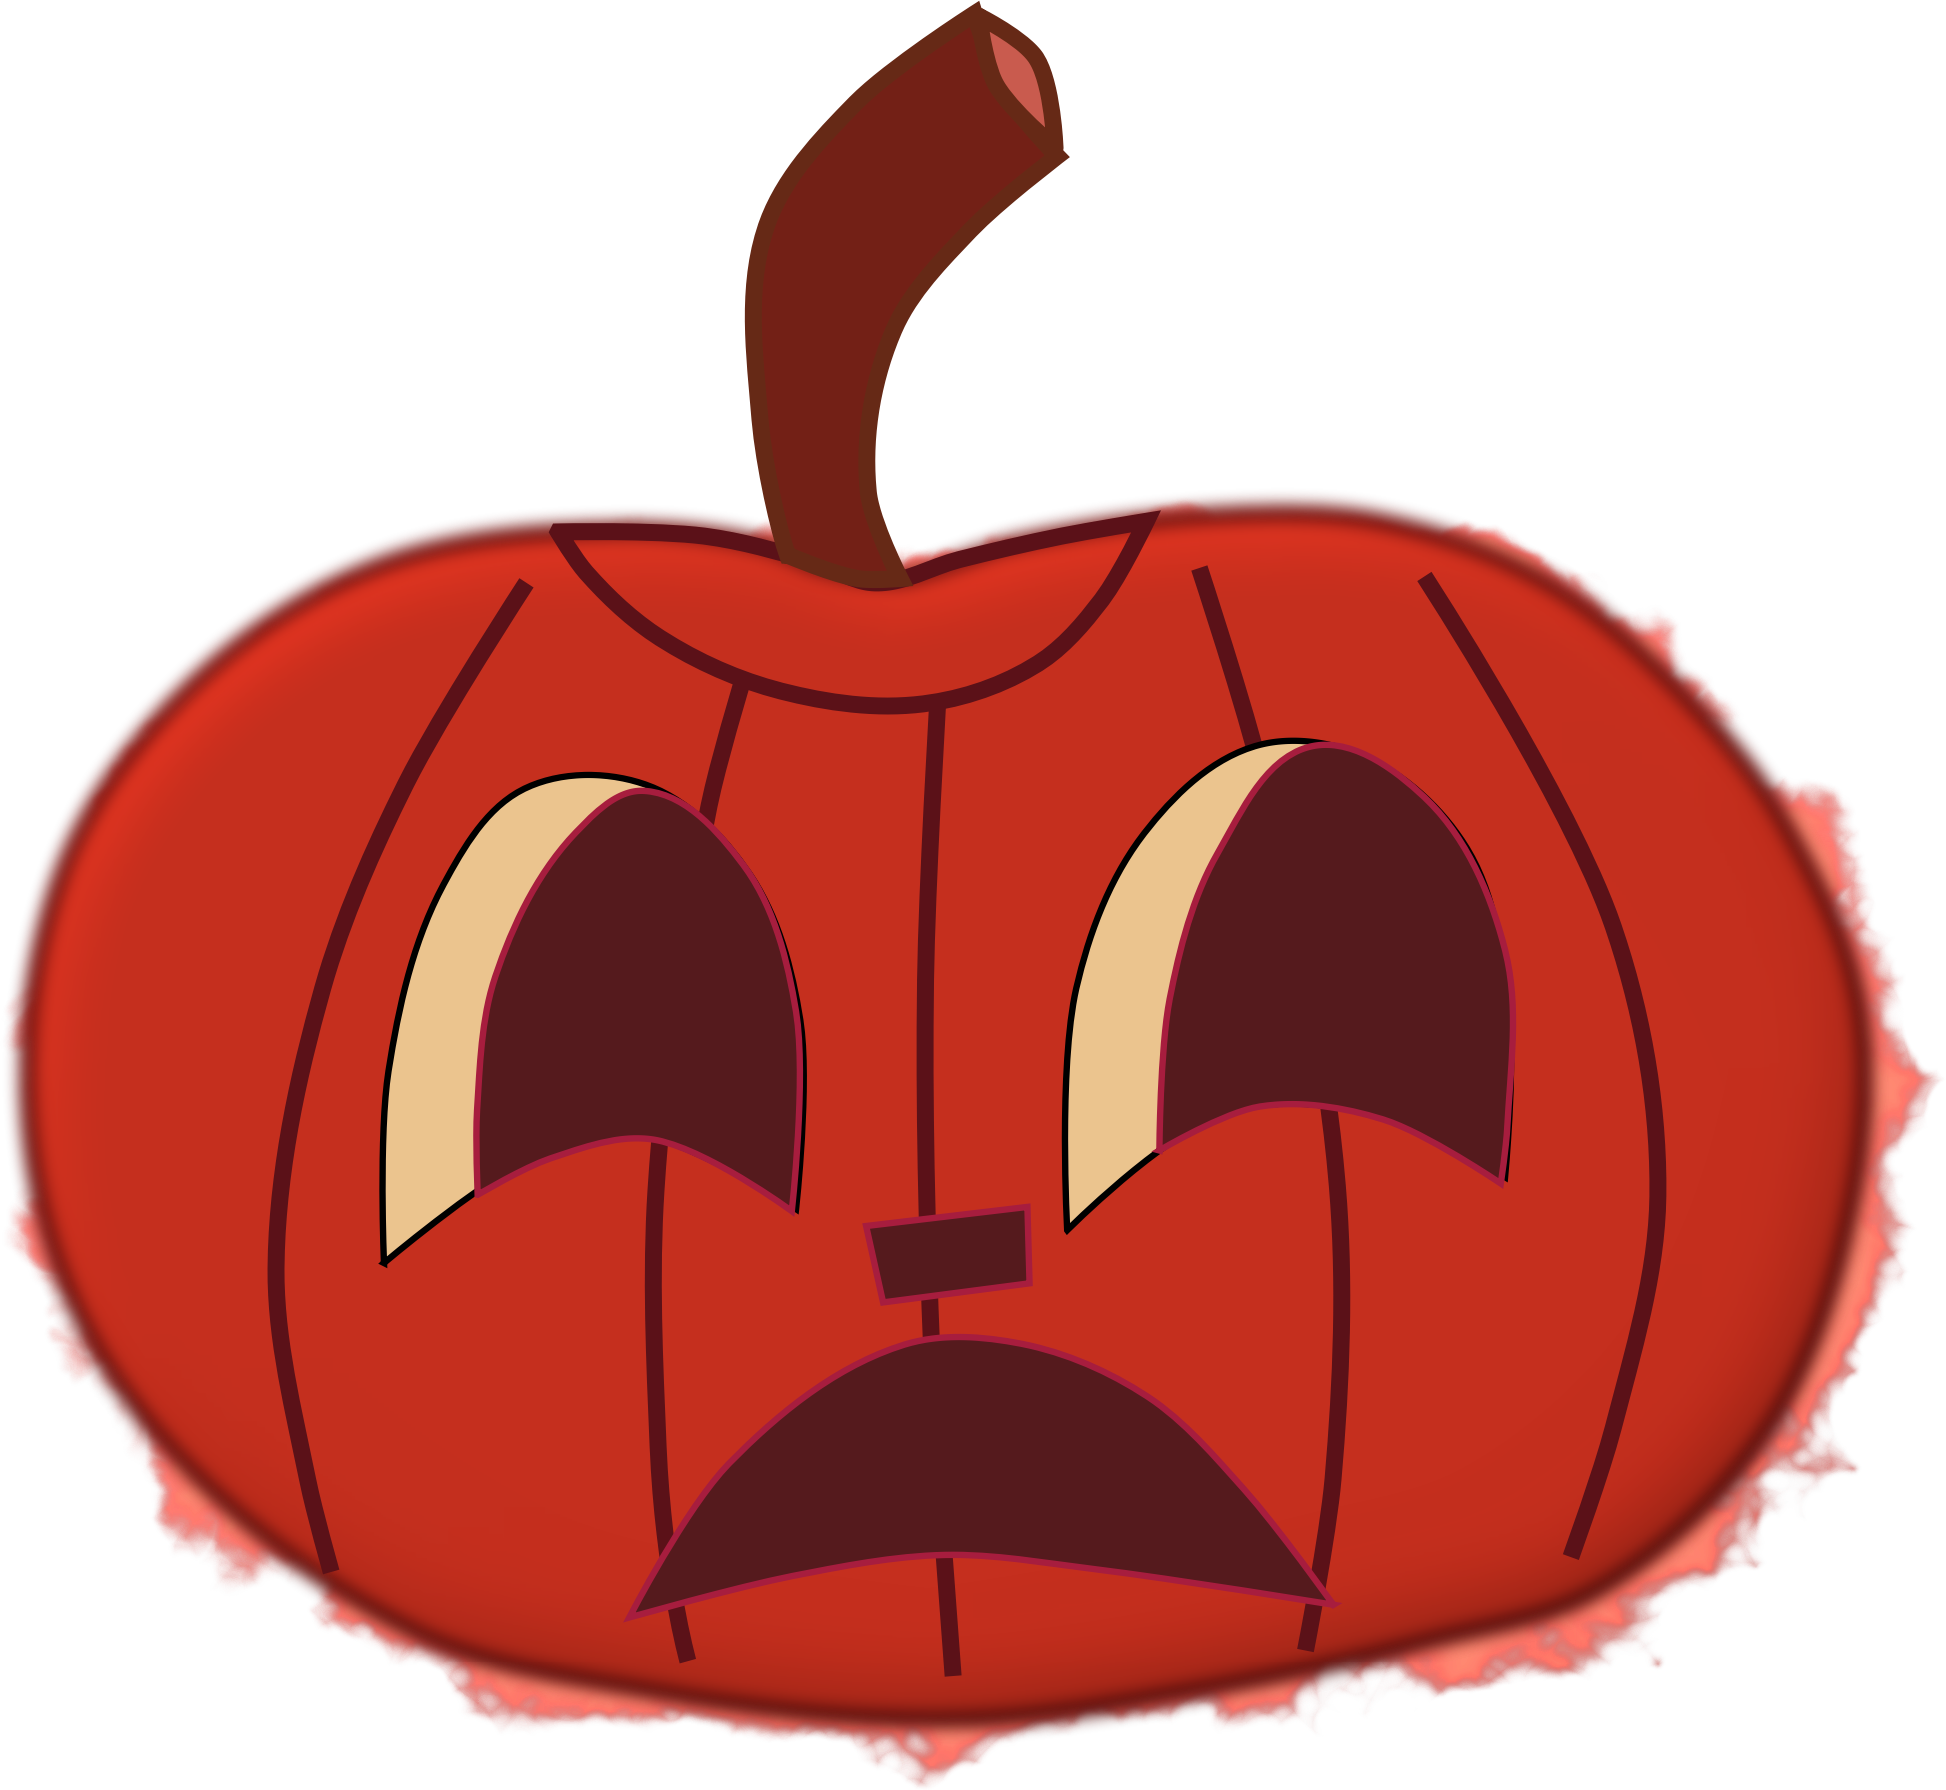 Clipart - Halloween faces for pumpkins, orange